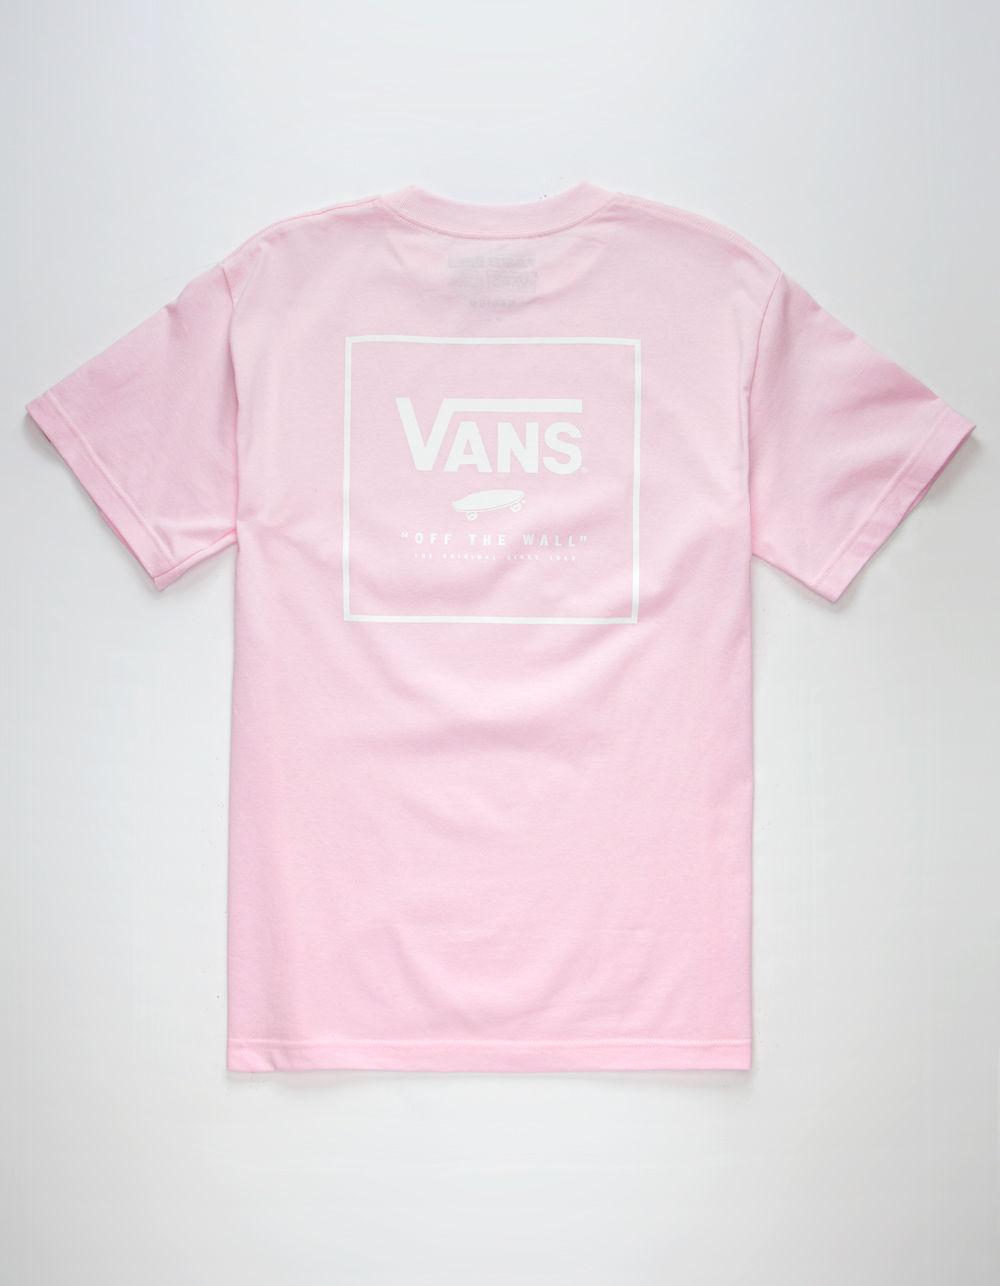 vans shirt pink